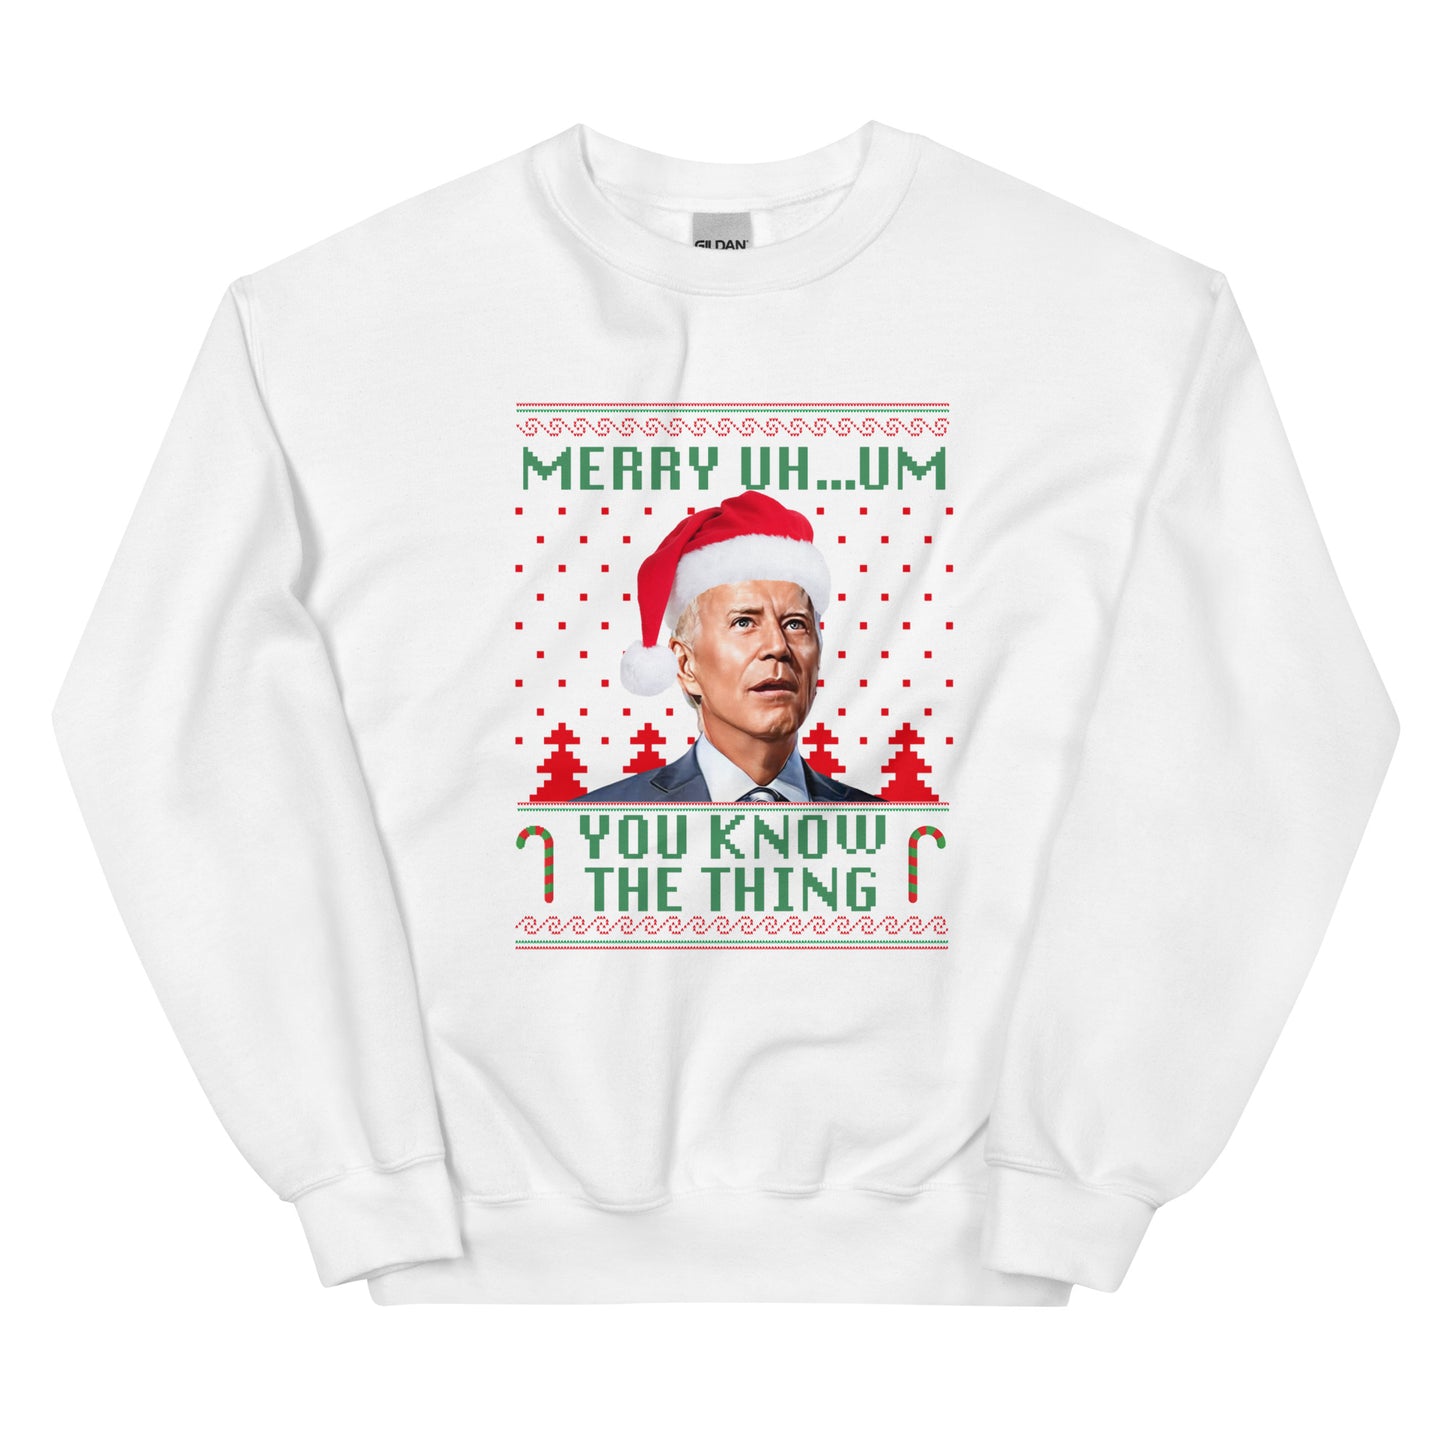 Merry Uh...Um You Know The Thing Crewneck Sweatshirt